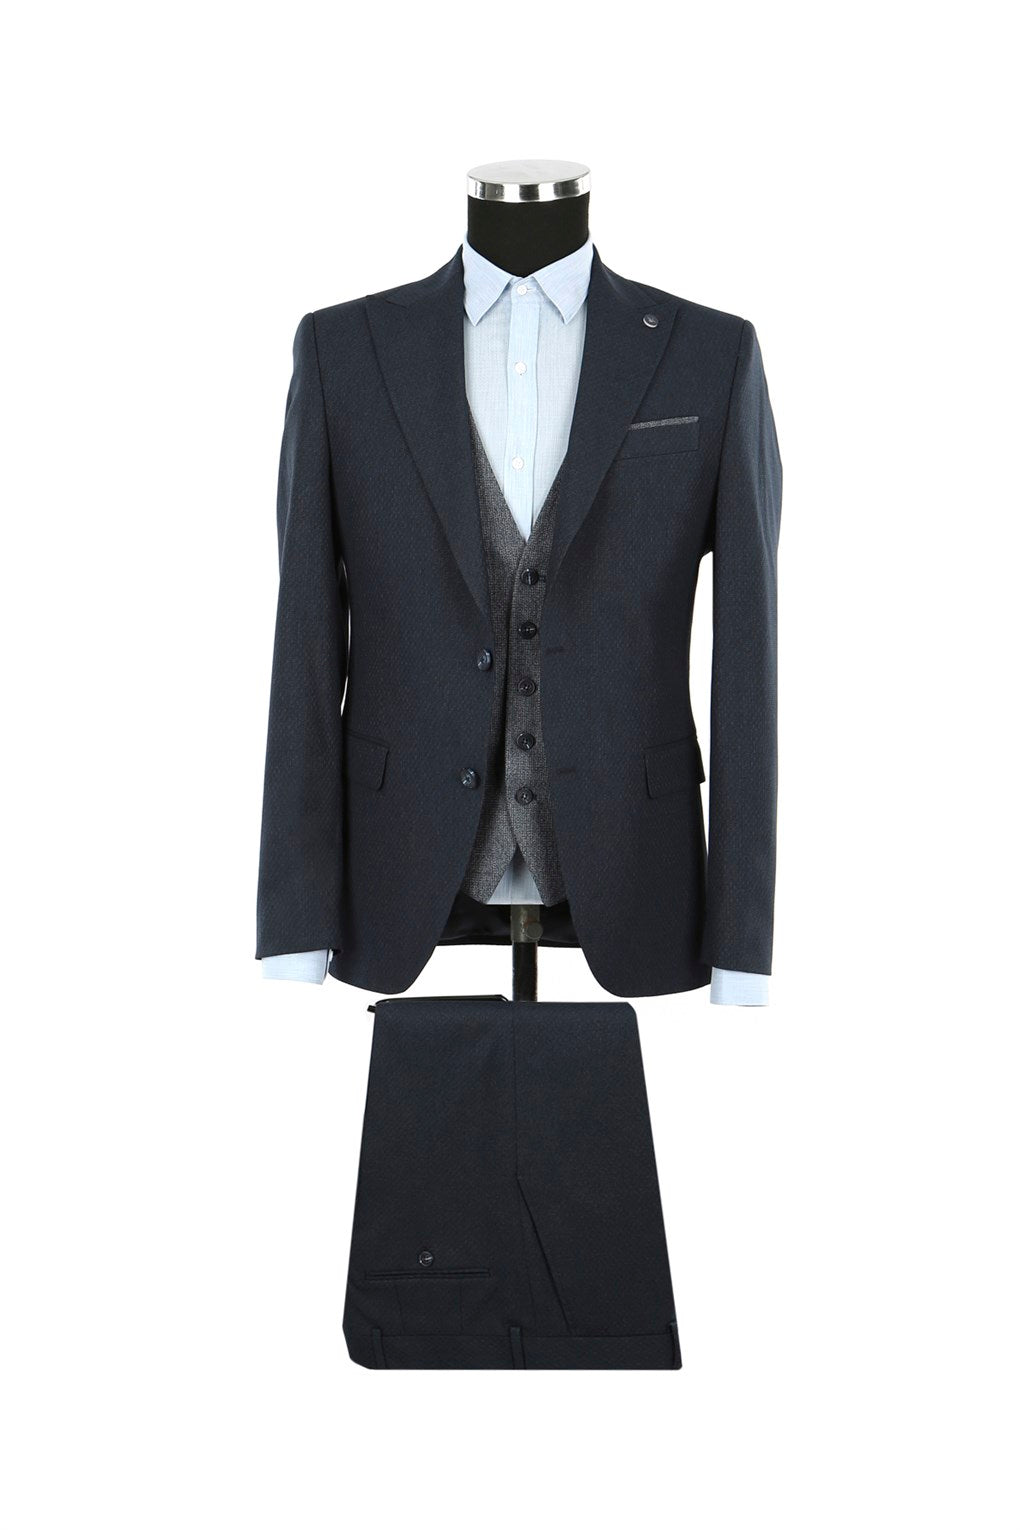 JAKAMEN - Dark Navy Blue Slim Fit Pointed Collar Vest Men's Suit